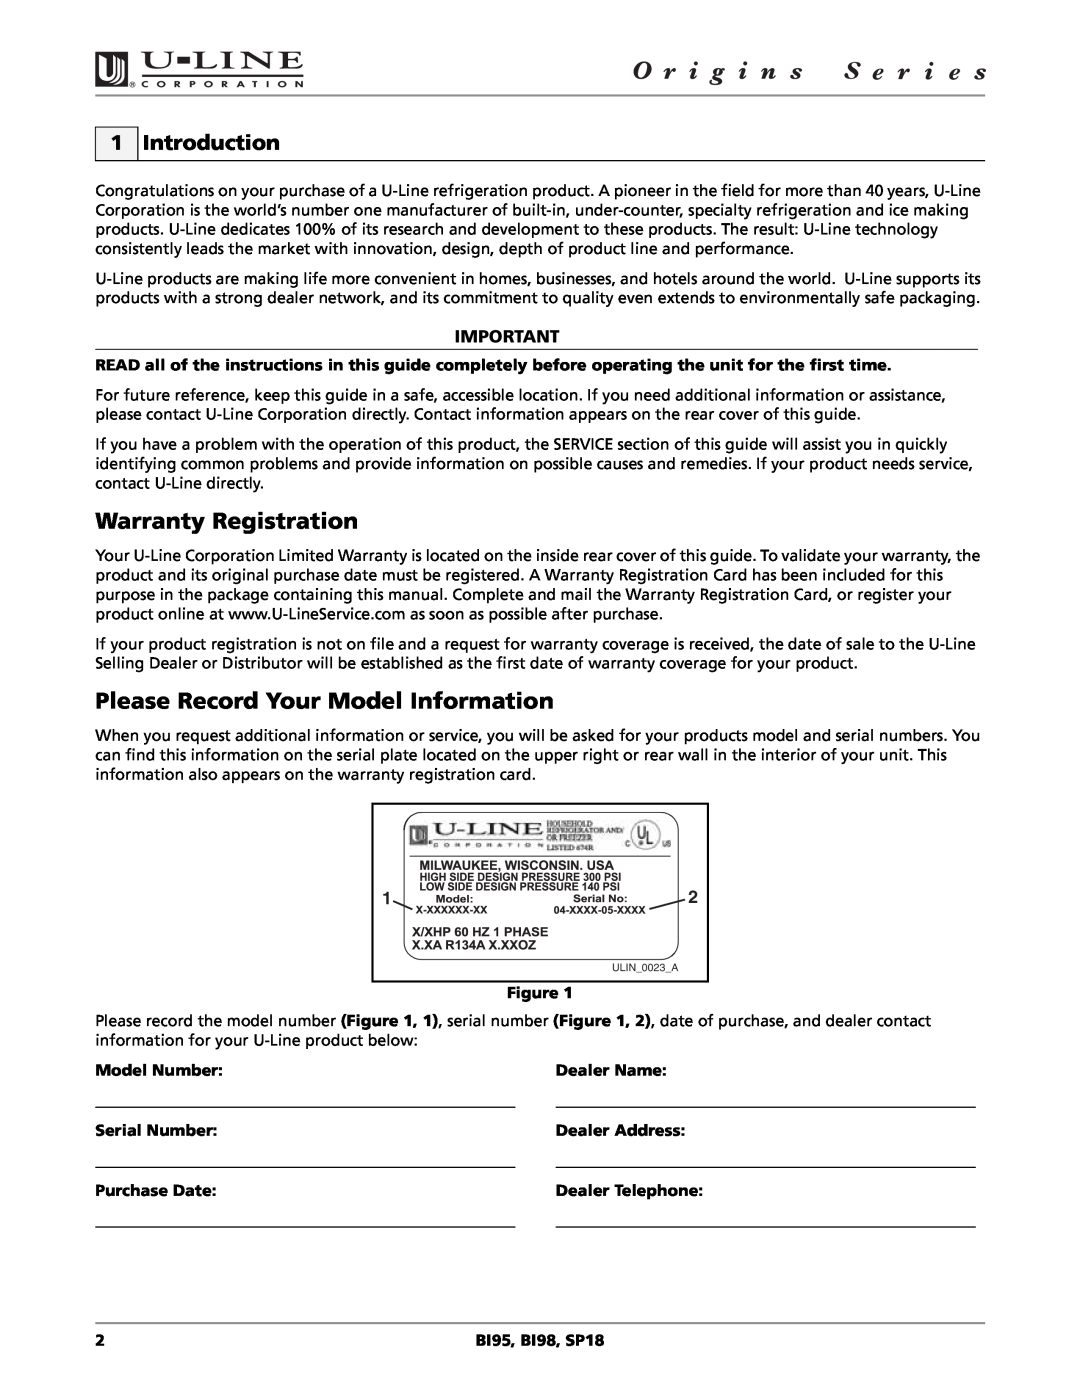 U-Line BI95, SP18, BI98 manual Warranty Registration, Please Record Your Model Information, Introduction 